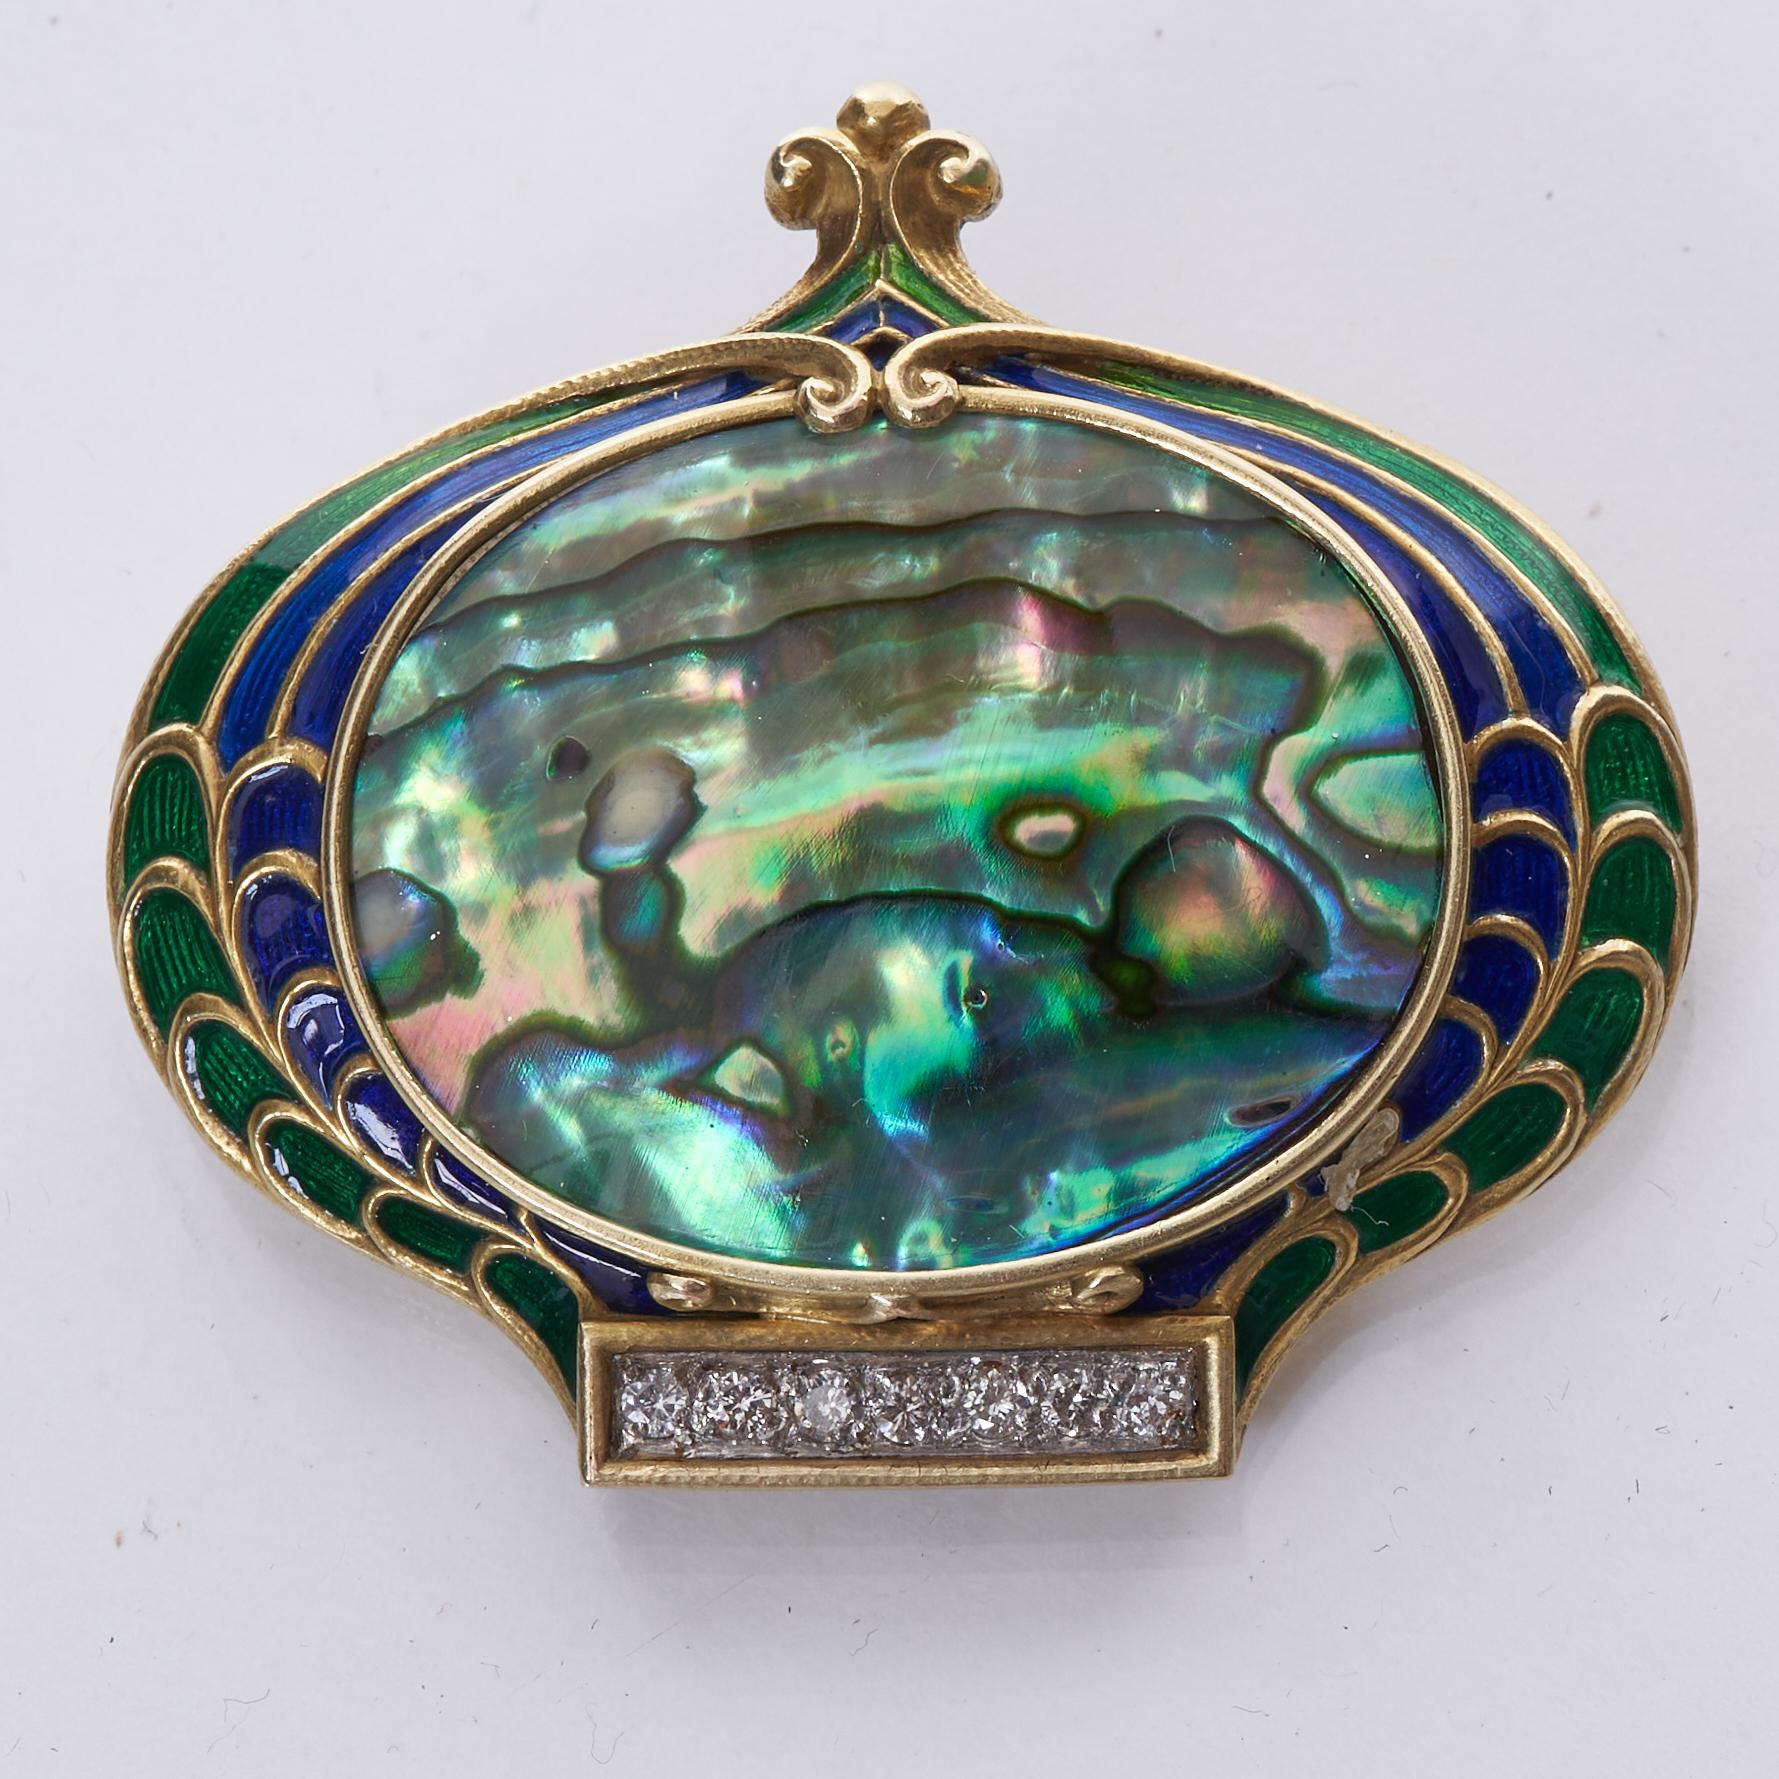 Women's Marcus & Company Museum Quality Gold Diamond and Enamel Art Nouveau Brooch